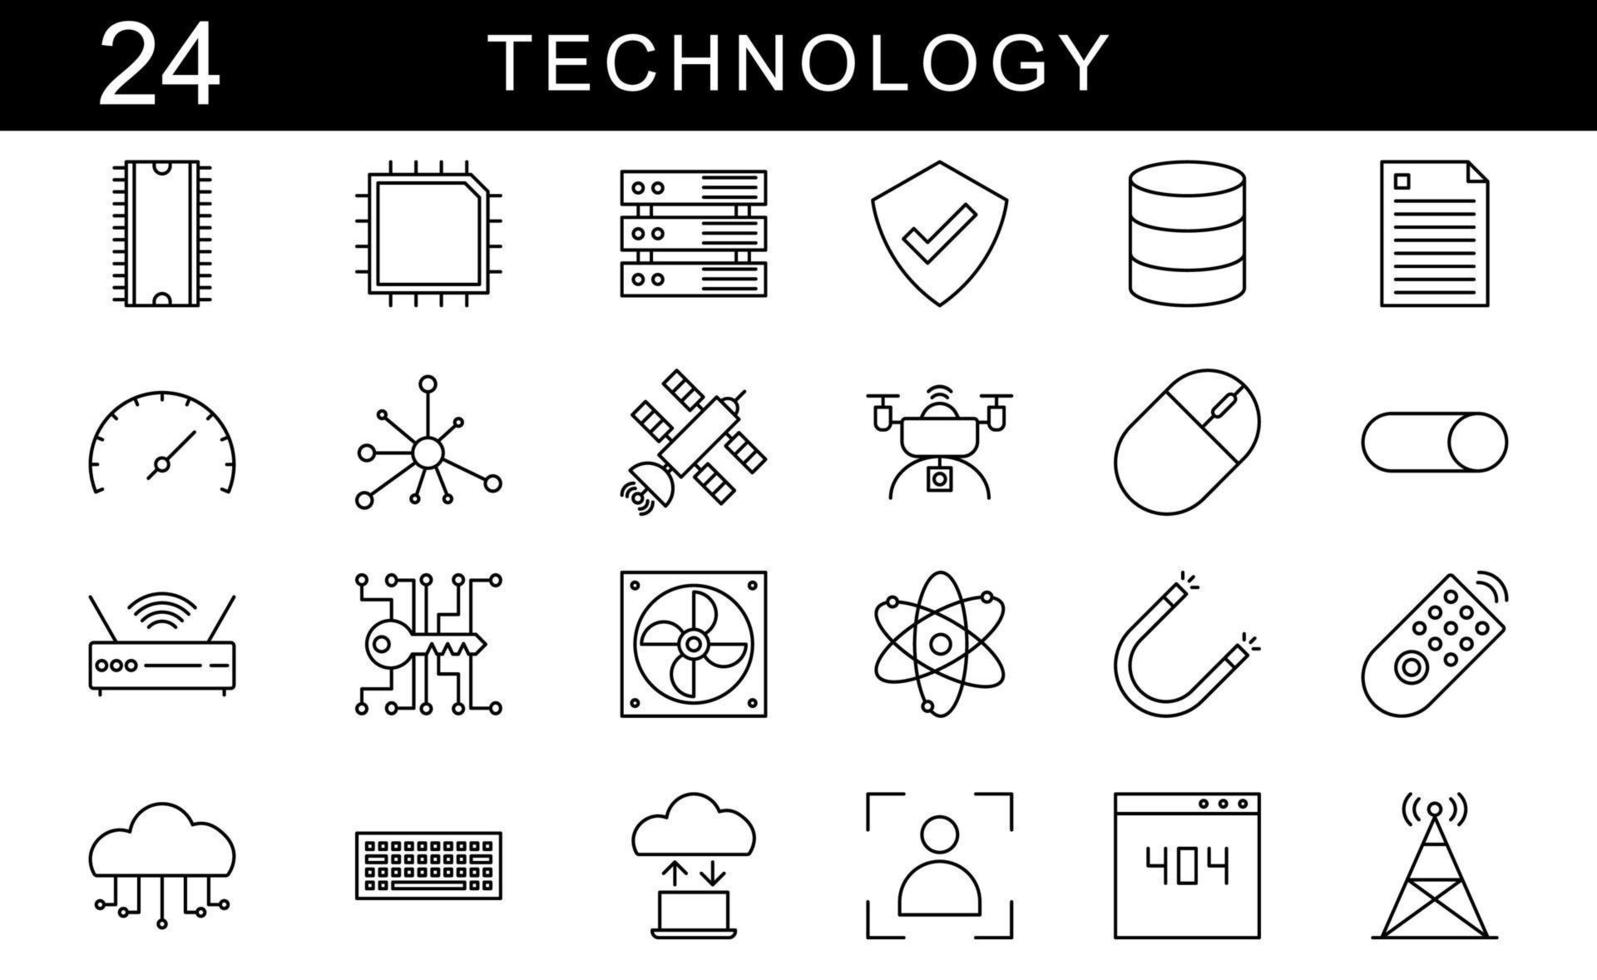 Technologie-Icons gesetzt. Technologie Fortschritt Wissenschaft, Cloud Computing, Server, Magnet, Drohne, Verbindung, KI, Router, Tastatur und Datenbank. Vektor-Illustration. Folge 10. vektor